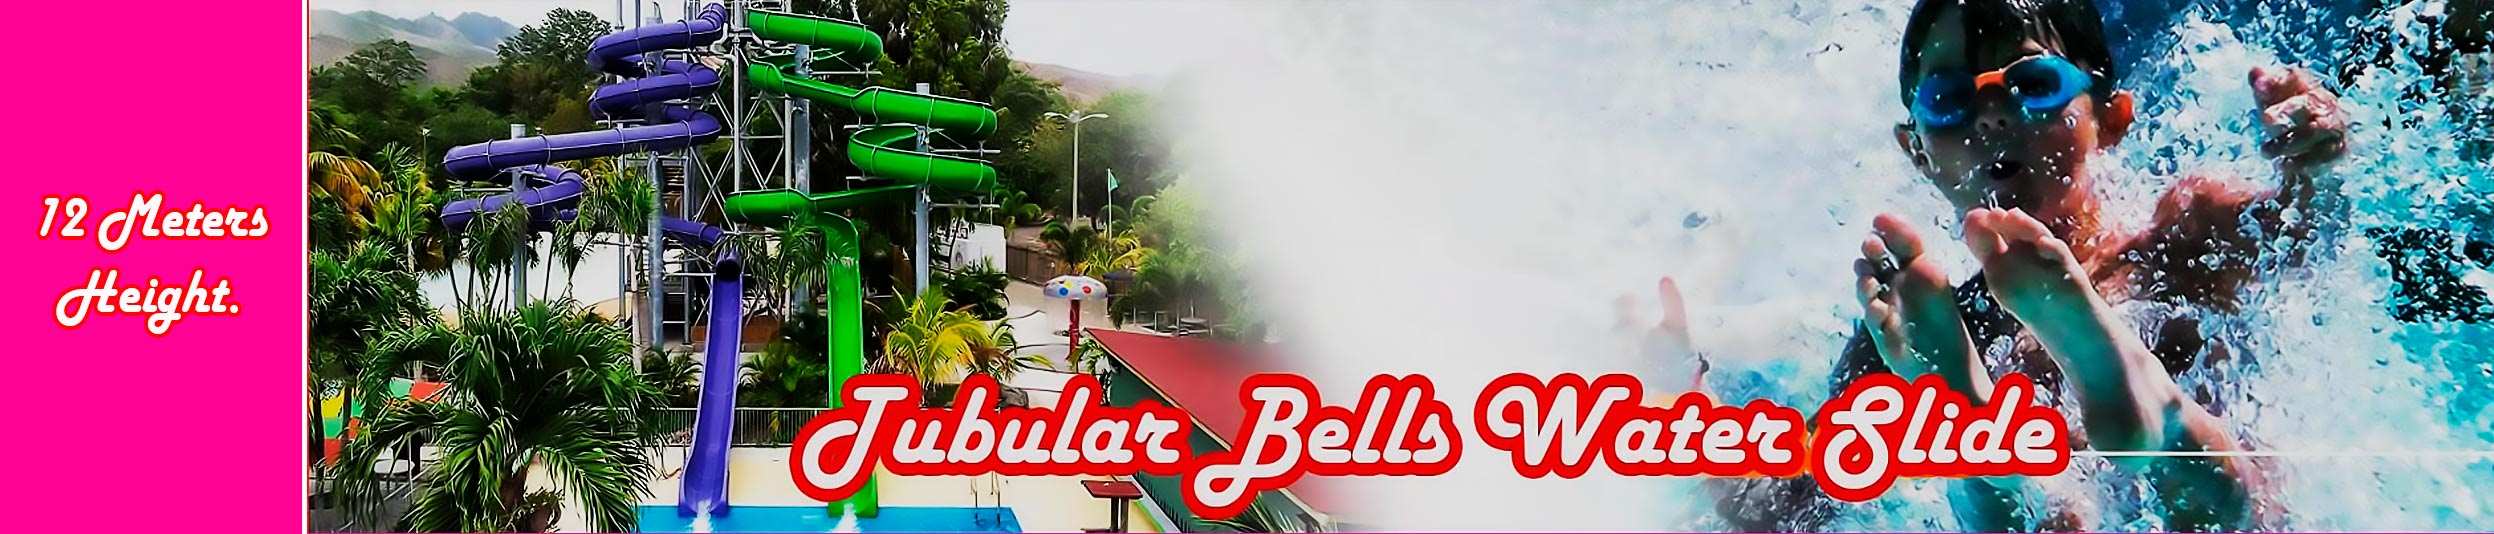 tubular bells water slide-4